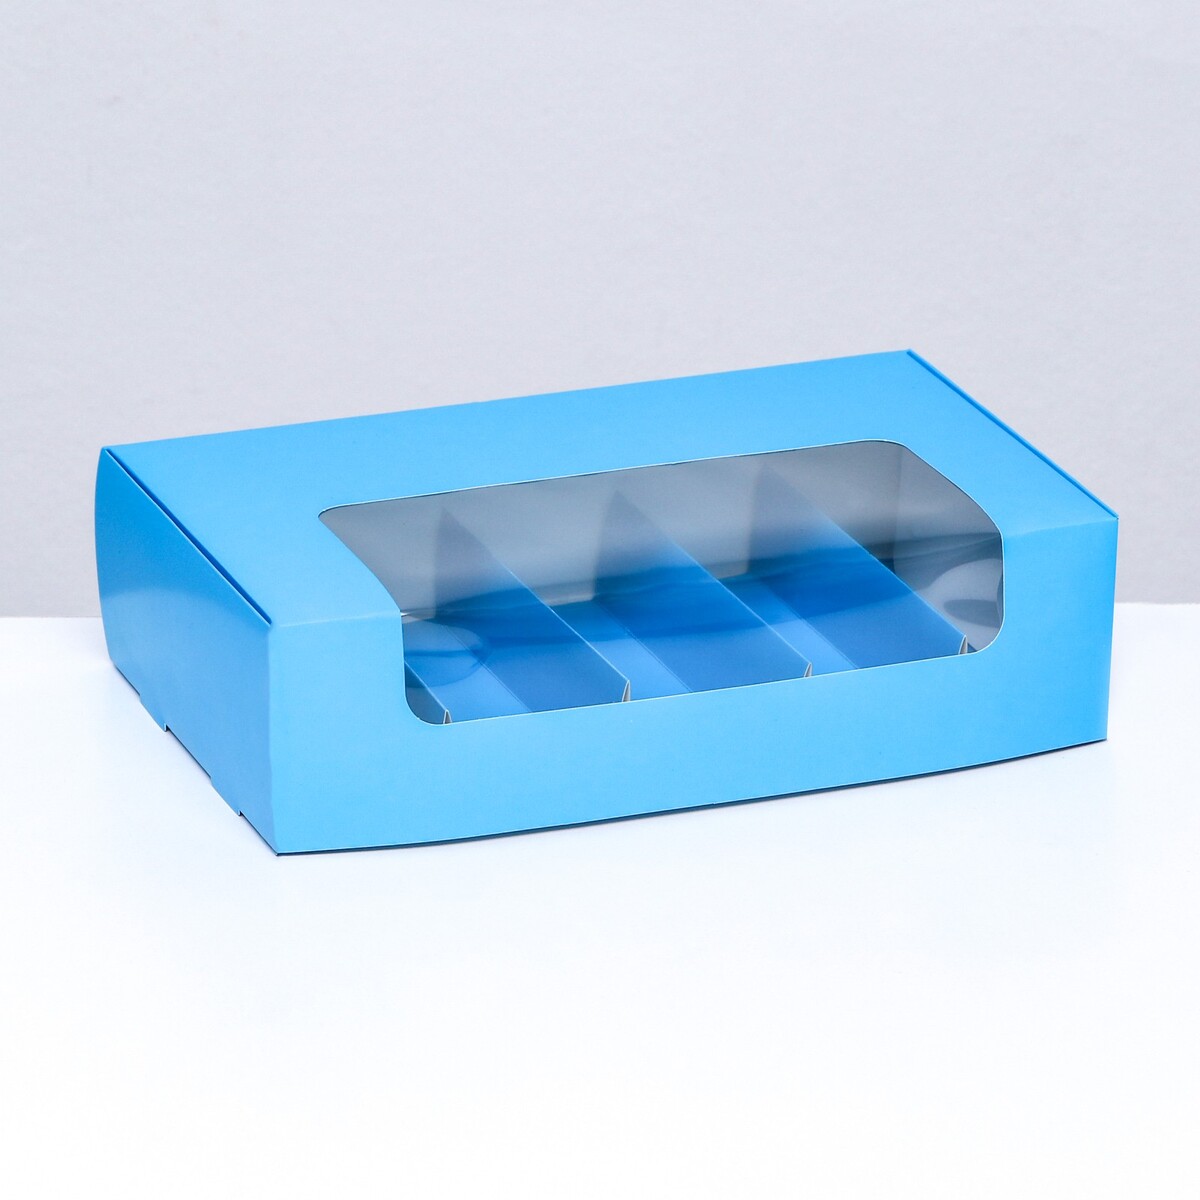 Коробка складная, под 5 эклеров голубой, 25 х 15 х 6,6 см коробка складная под 5 эклеров розовый 25 х 15 х 6 6 см